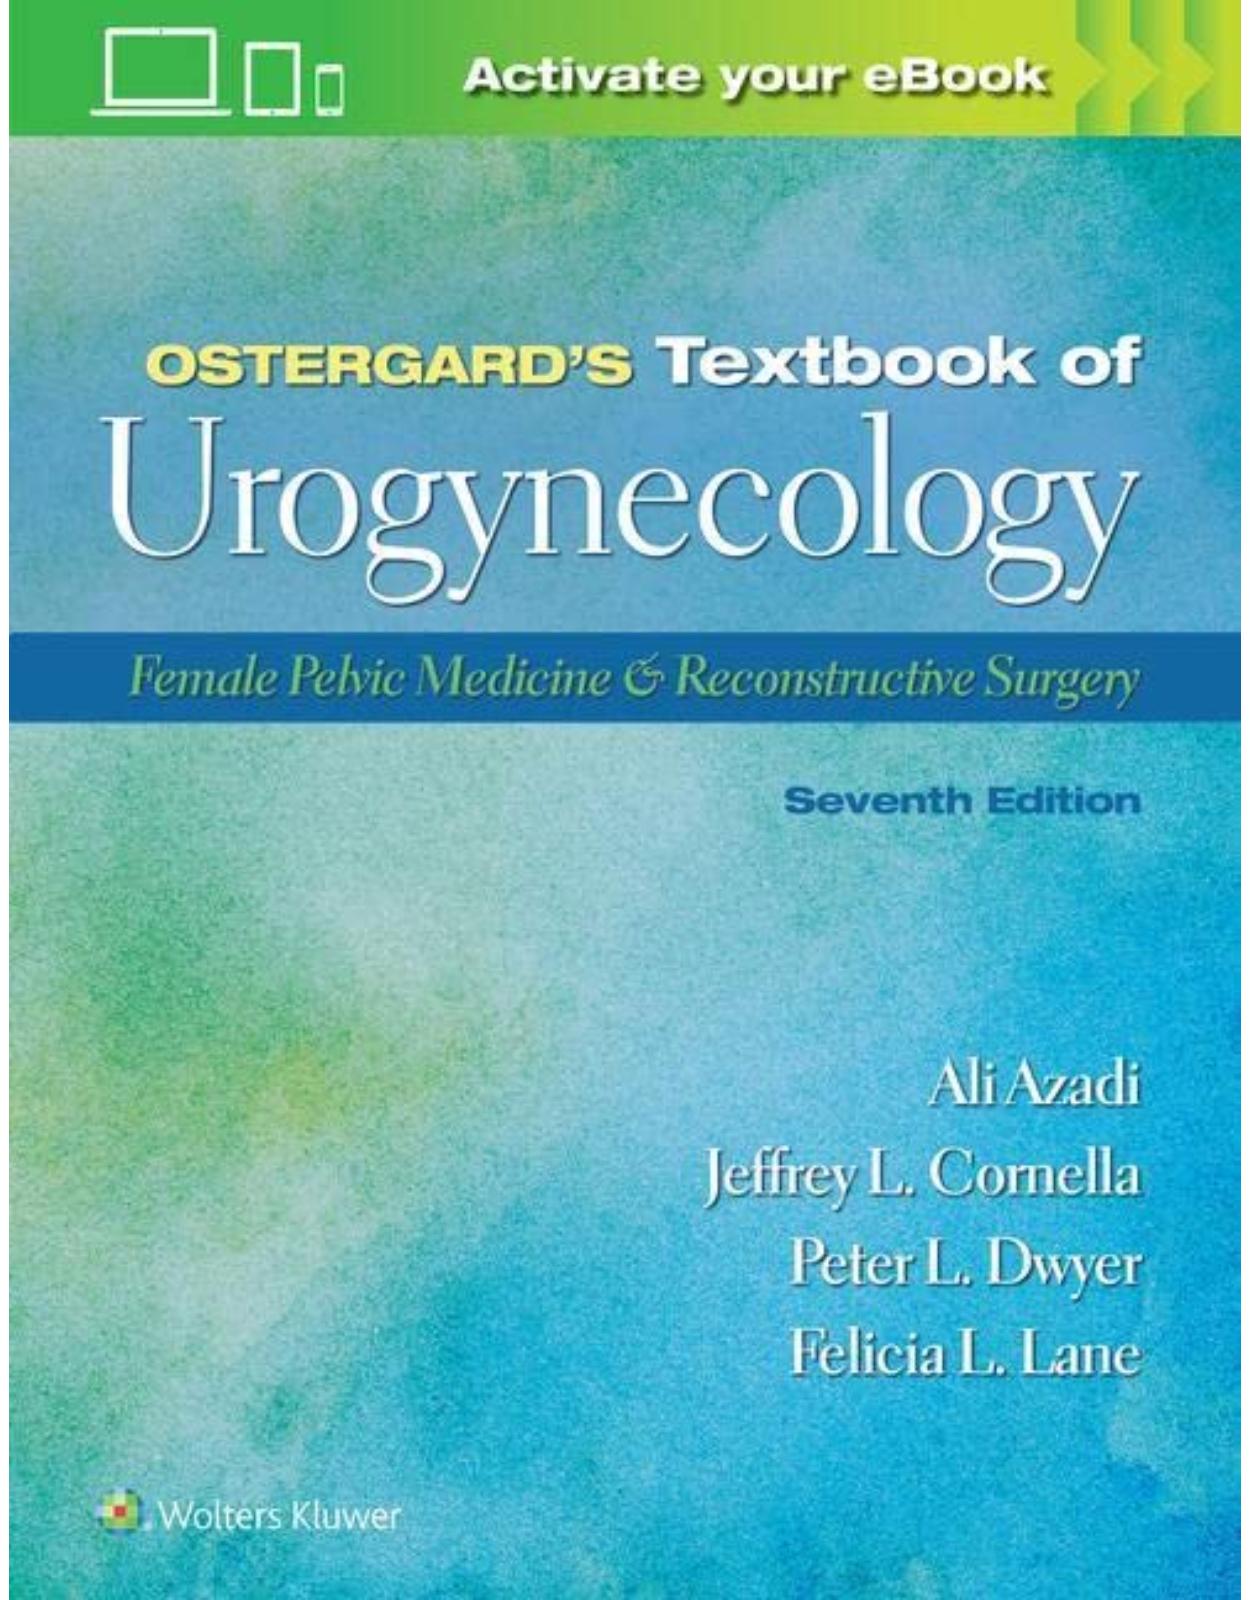 Ostergard’s Textbook of Urogynecology: Female Pelvic Medicine & Reconstructive Surgery